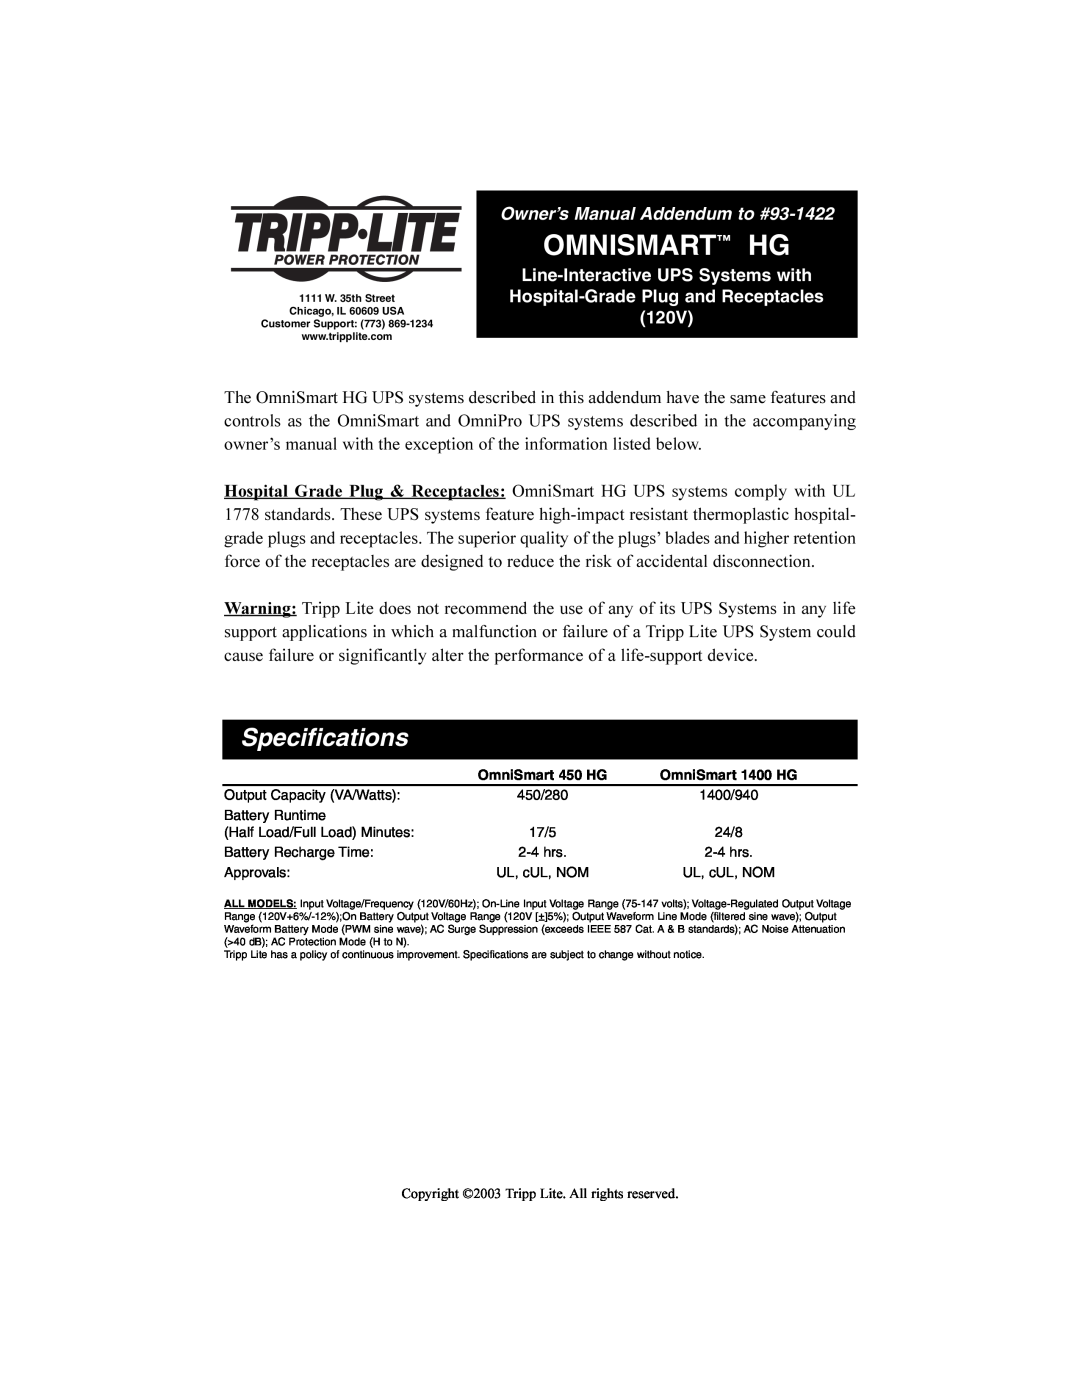 Tripp Lite HG owner manual Omnismart Hg, Specifications 